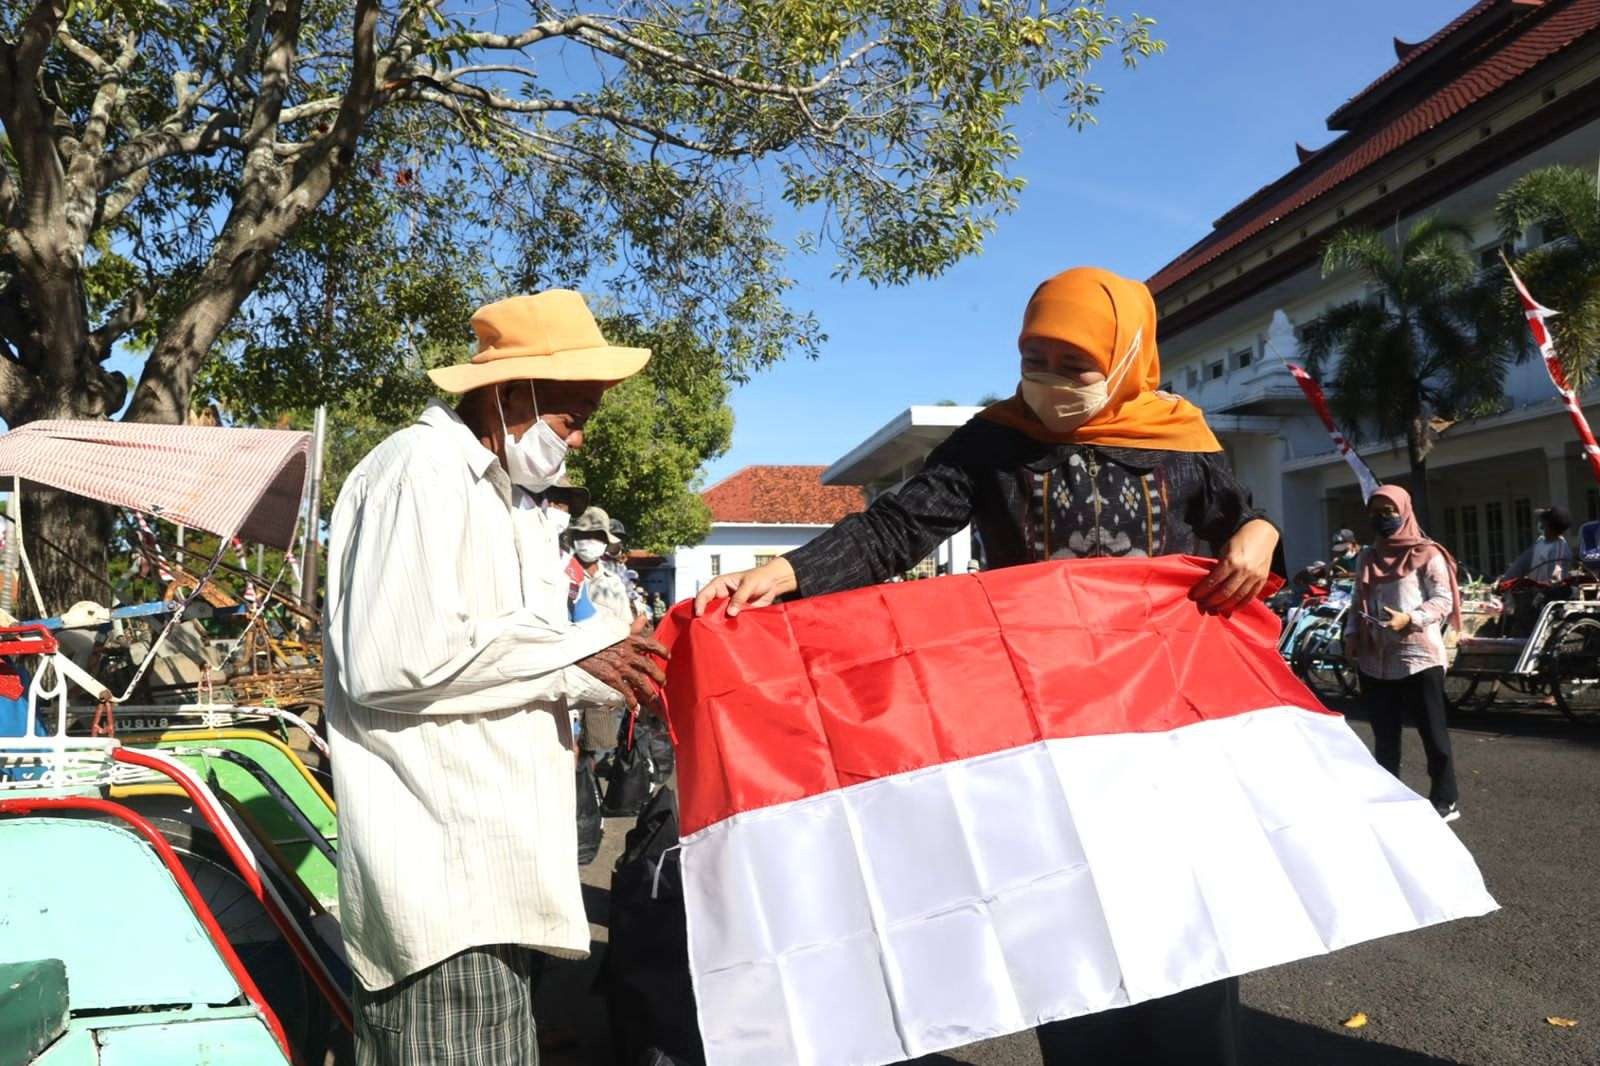 Gubernur Jawa Timur, Khofifah Indar Parawansa (kanan) saat memberikan bendera merah putih kepada tukang becak di Kantor Bakorwil Pamekasan, Sabtu 6 Agustus 2022. (Foto: Dokumentasi Humas Pemprov Jatim)